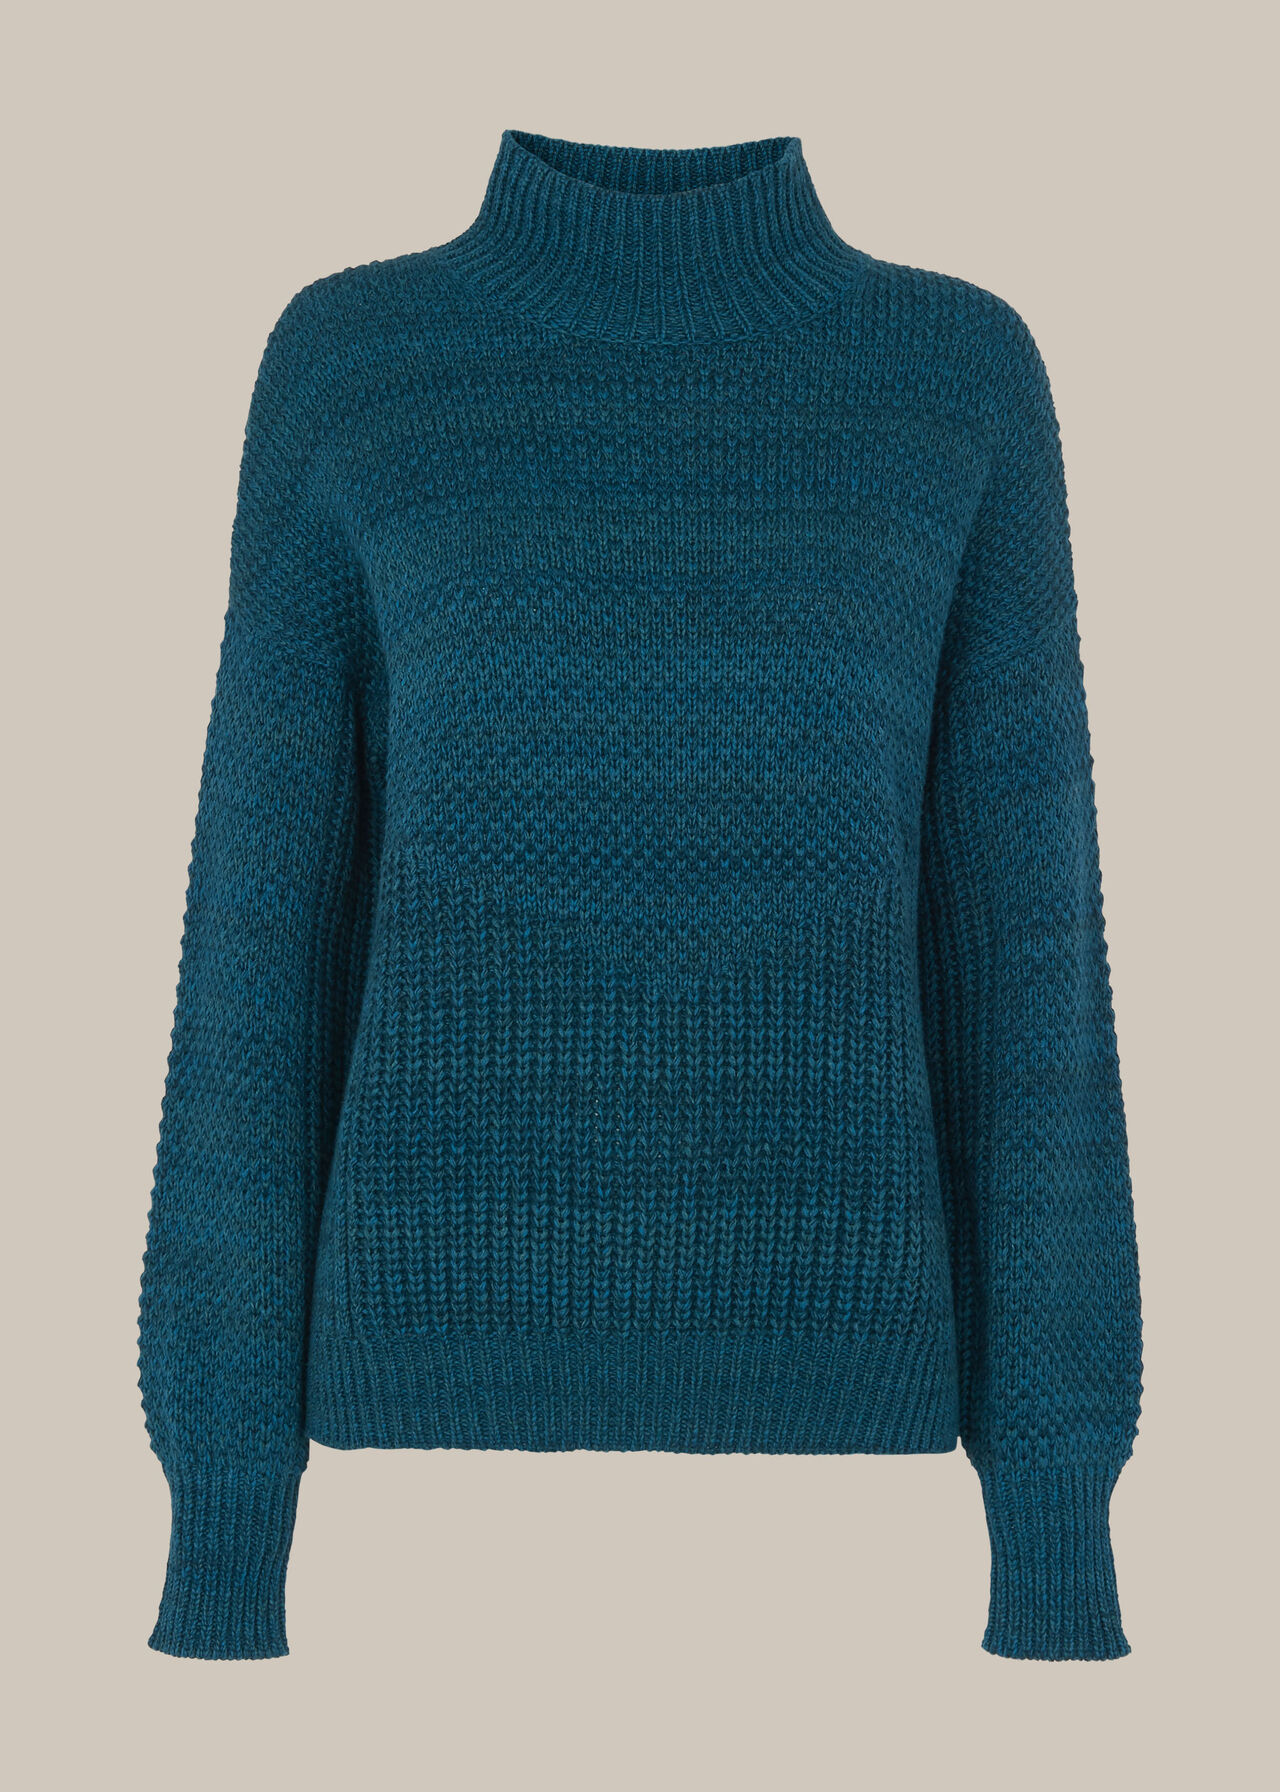 Moss Stitch Textured Knit